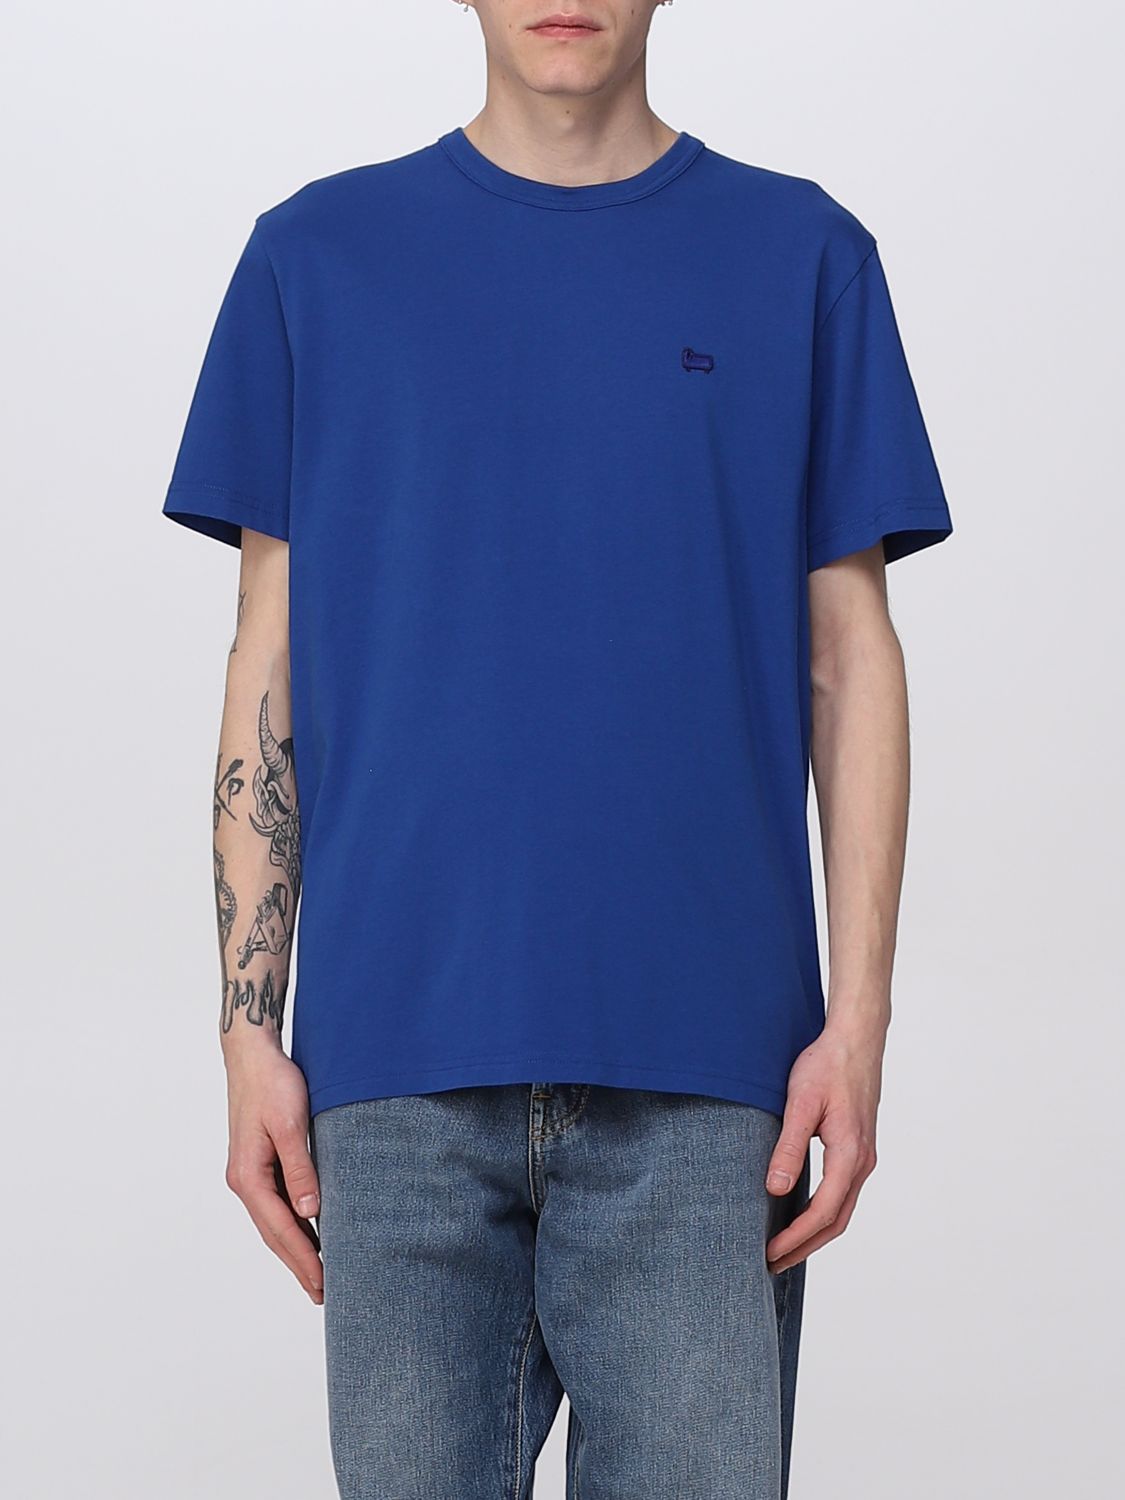 T-Shirt in Puro Cotone Woolrich / Bluette - Ideal Moda